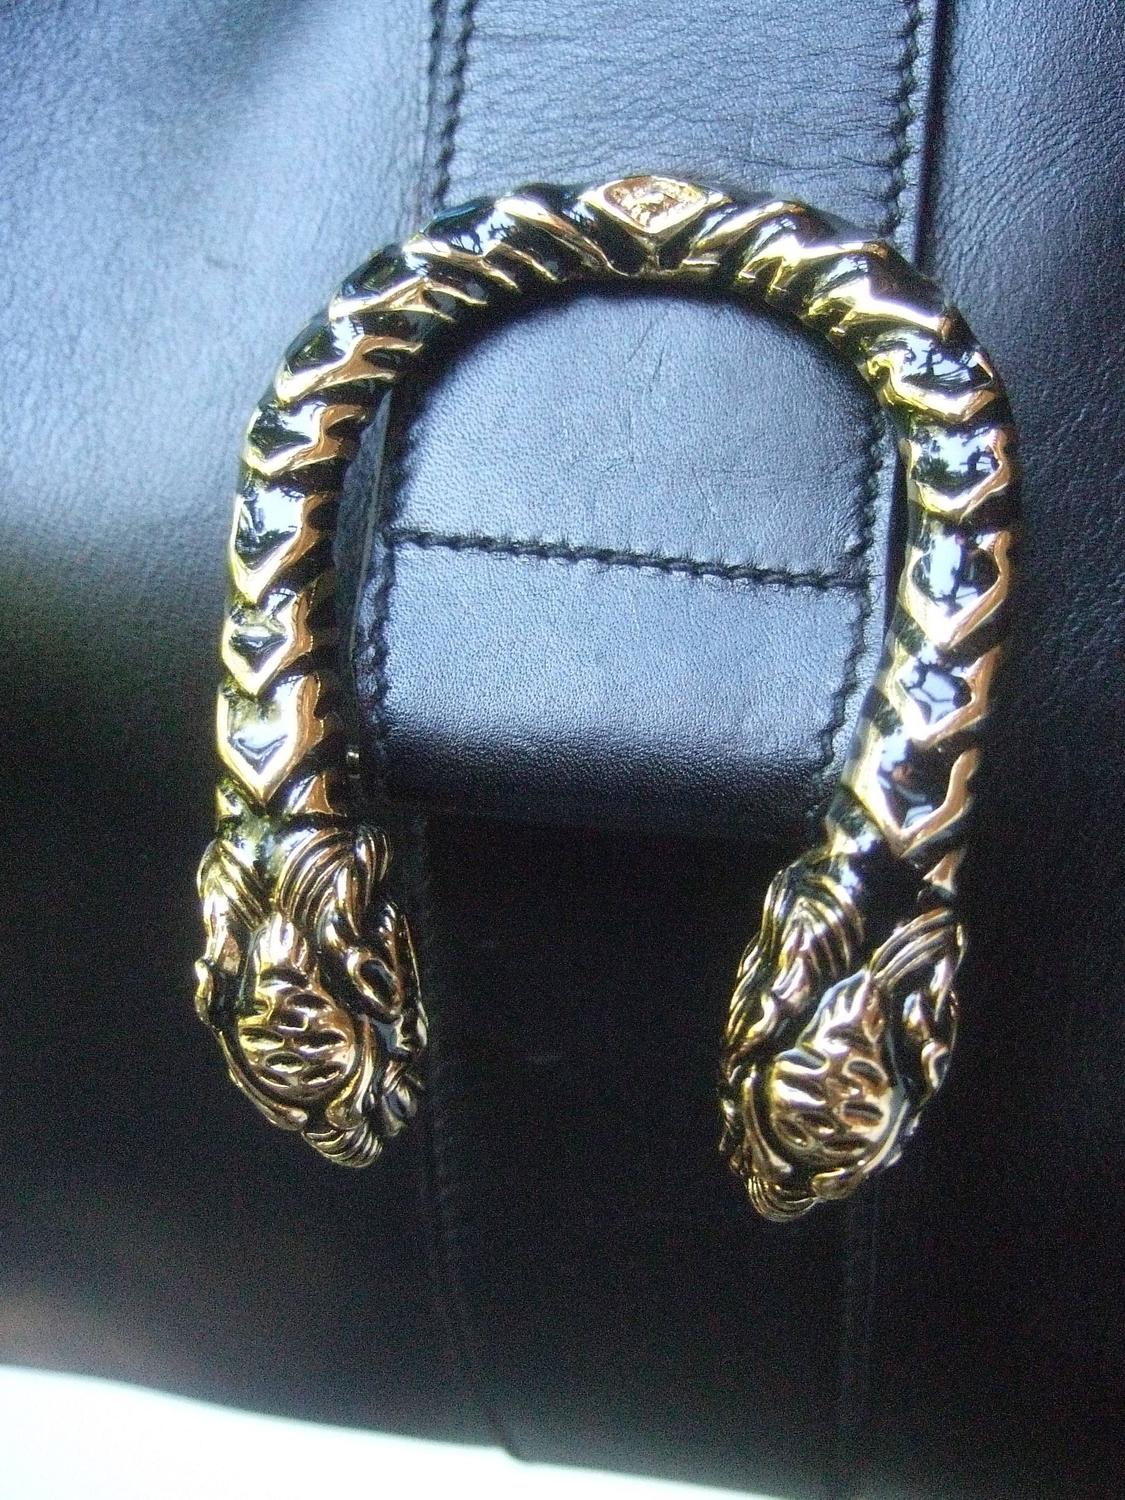 Gucci Italy Rare Ebony Leather Tiger Clasp Handbag For Sale at 1stdibs